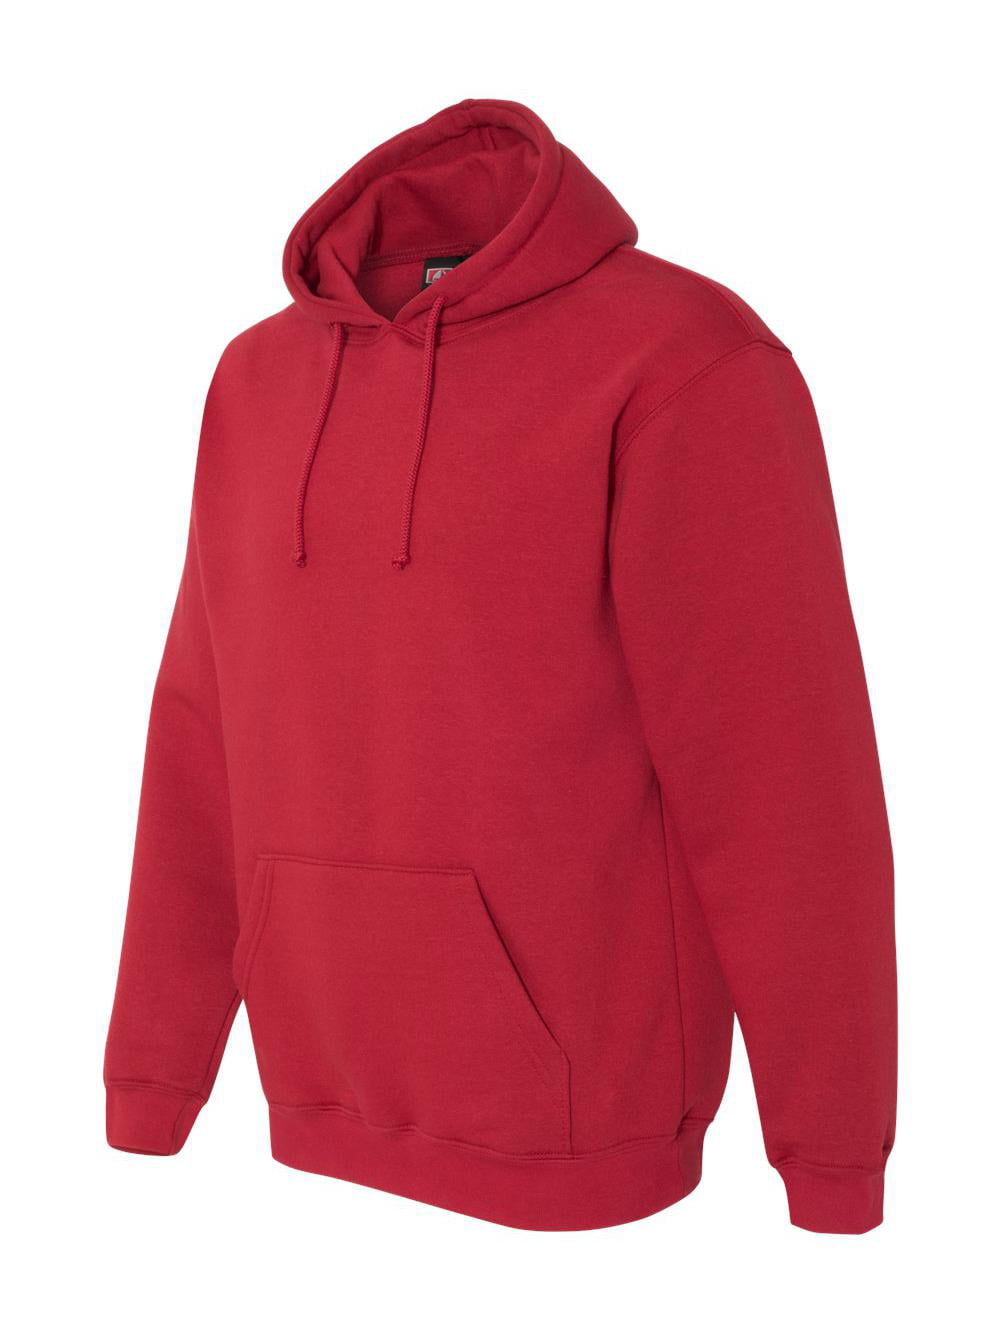 Bayside - Bayside - USA-Made Hooded Sweatshirt - 960 - Walmart.com ...